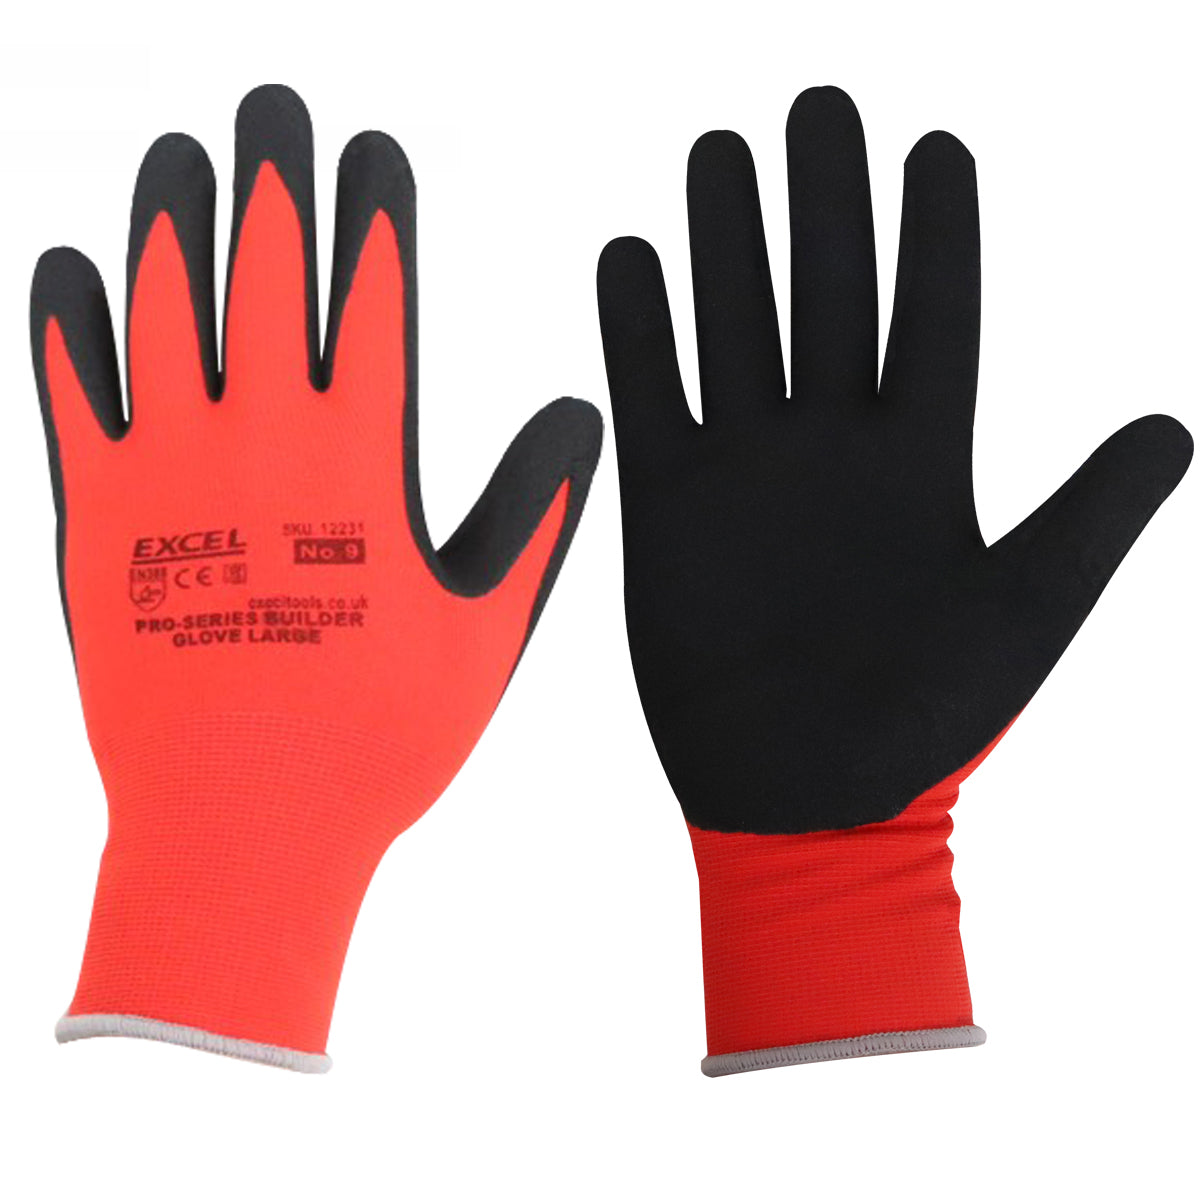 Excel Pro-Series Builder Gloves Red & Black Size XL Pack of 12